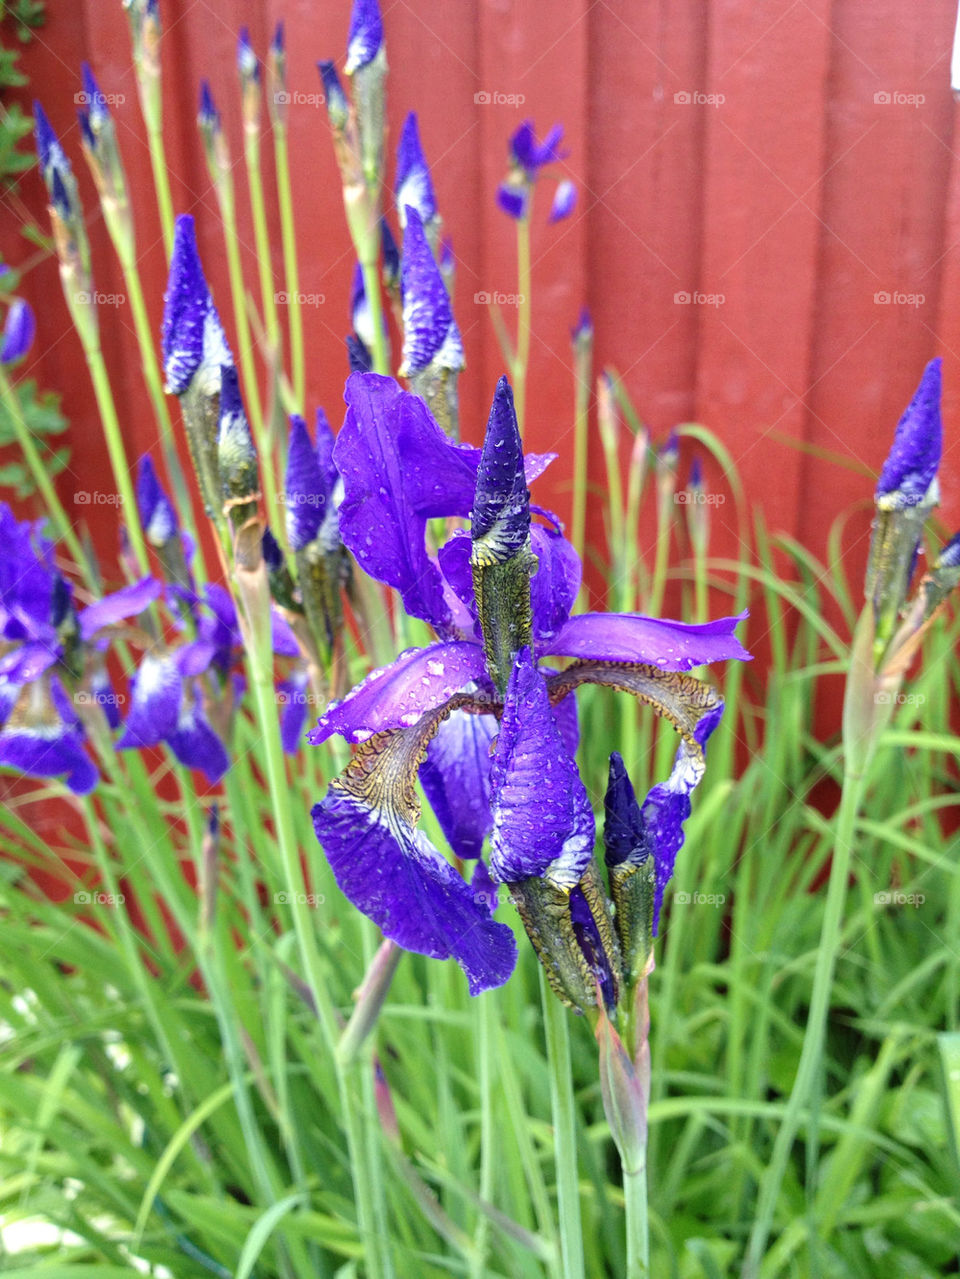 sweden flowers purple sommar by mamasnest